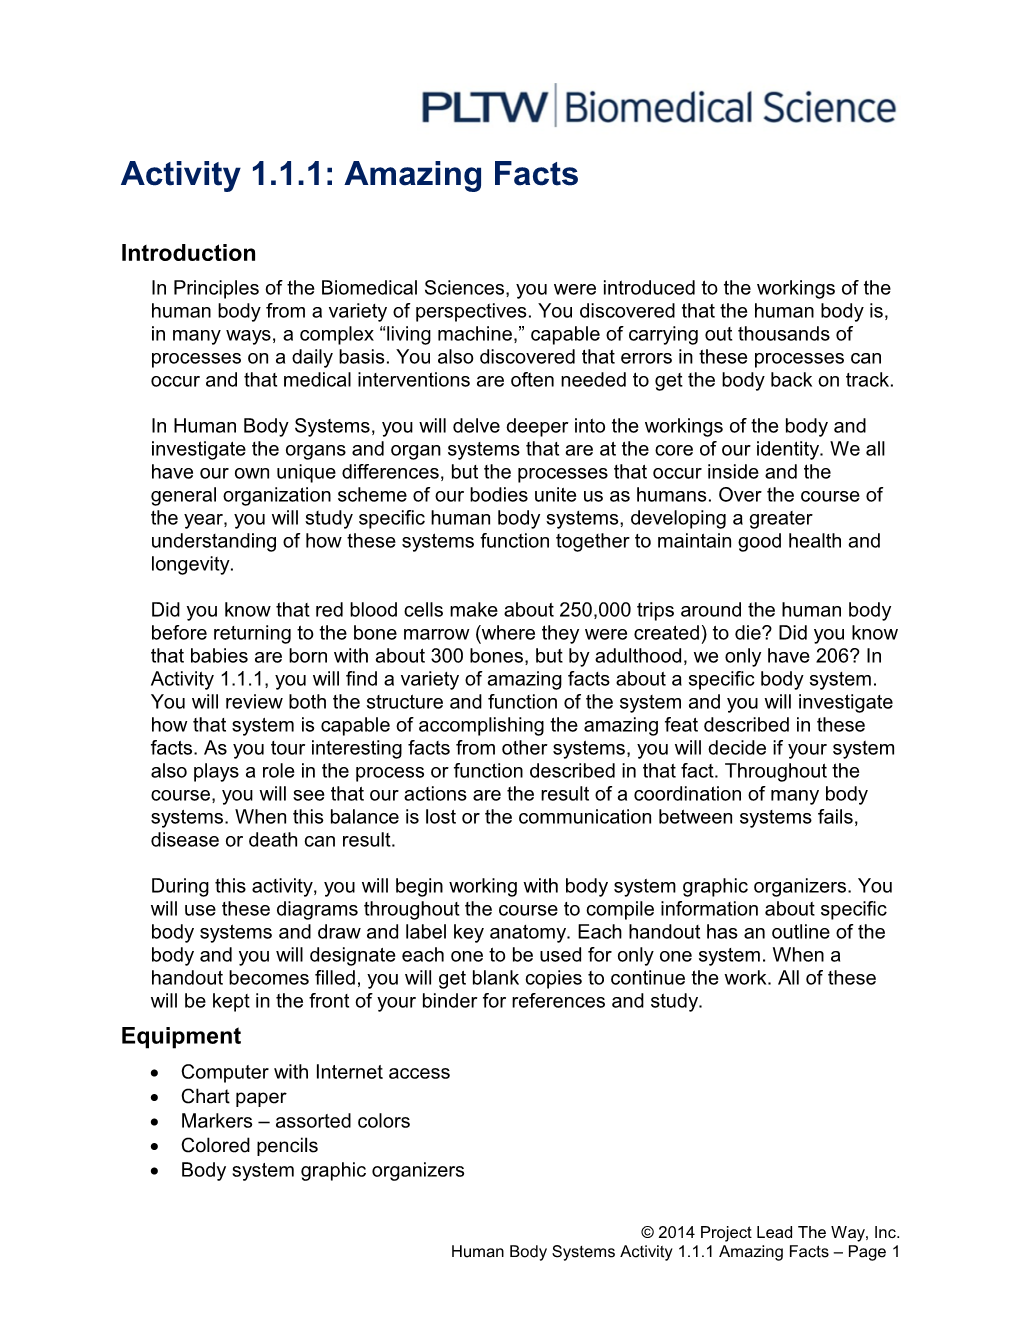 Activity 1.1.1: Amazing Facts